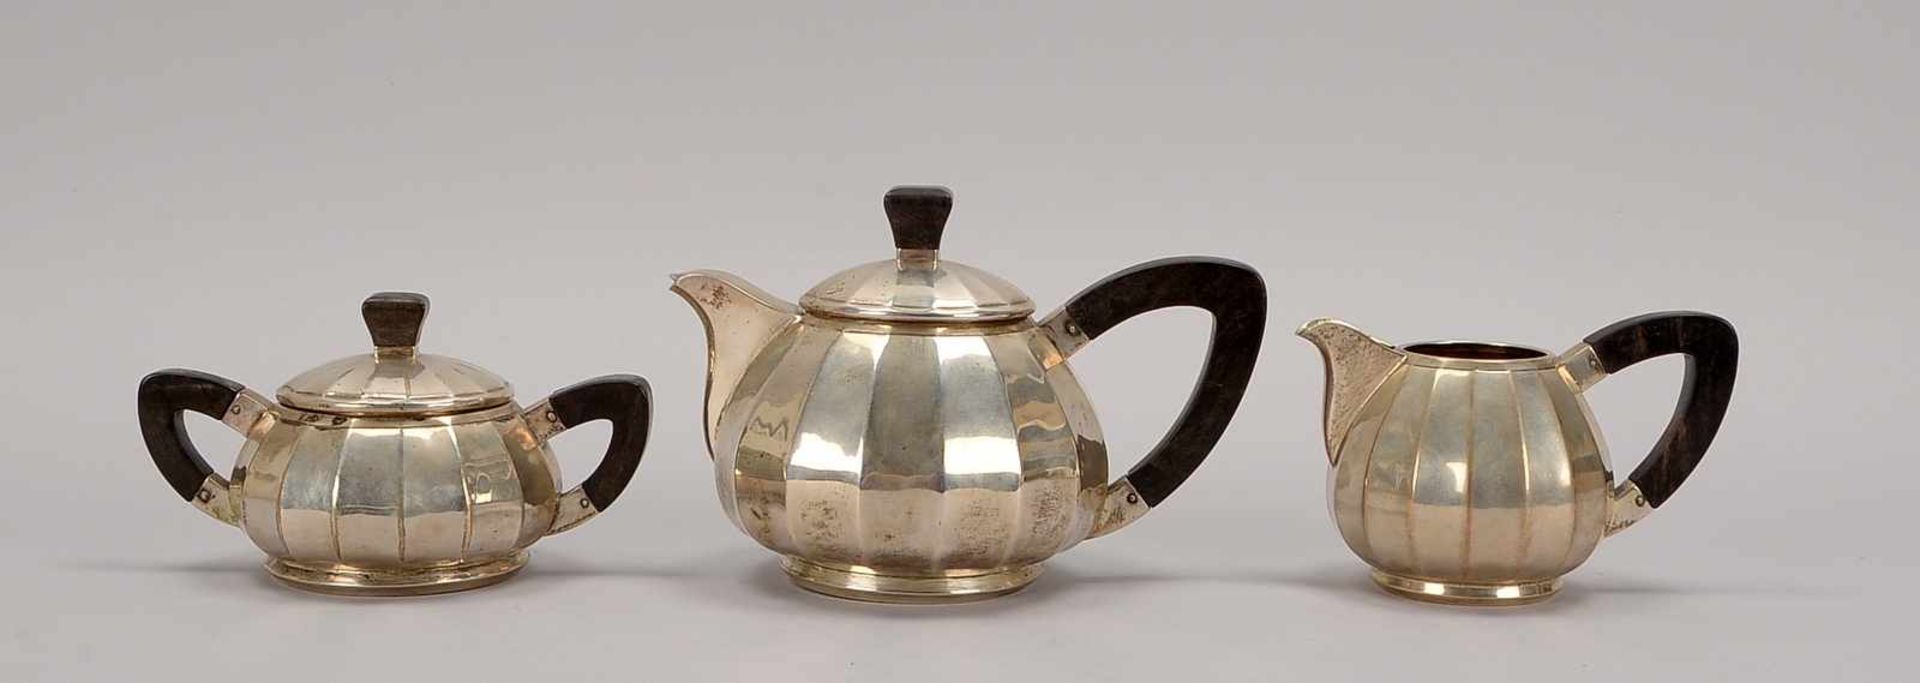 Teekern, Art déco (wohl Florenz), 800 Silber, Wandung mehrfach facettiert, Gefäße mit